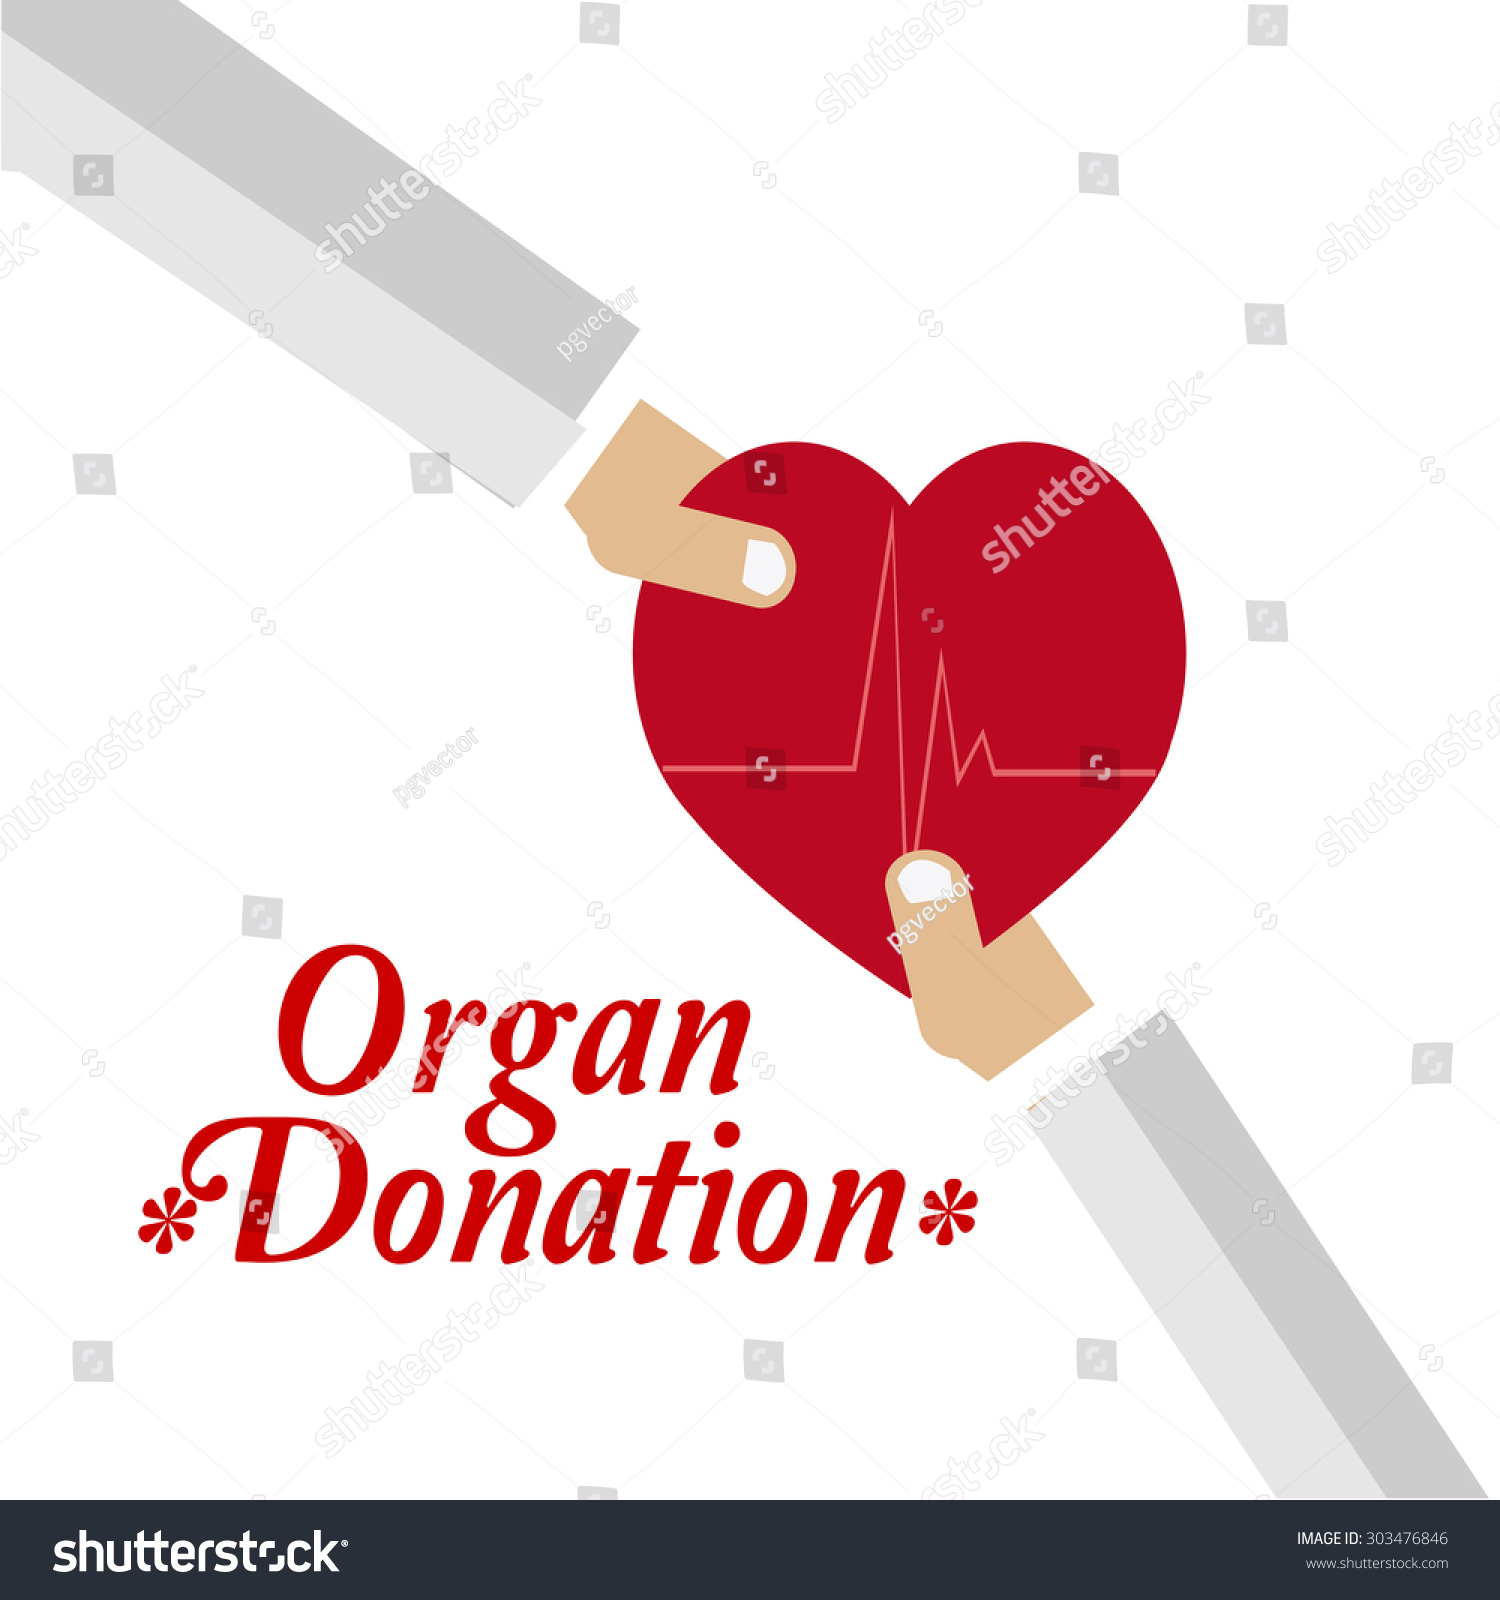 organ donation clipart - photo #14